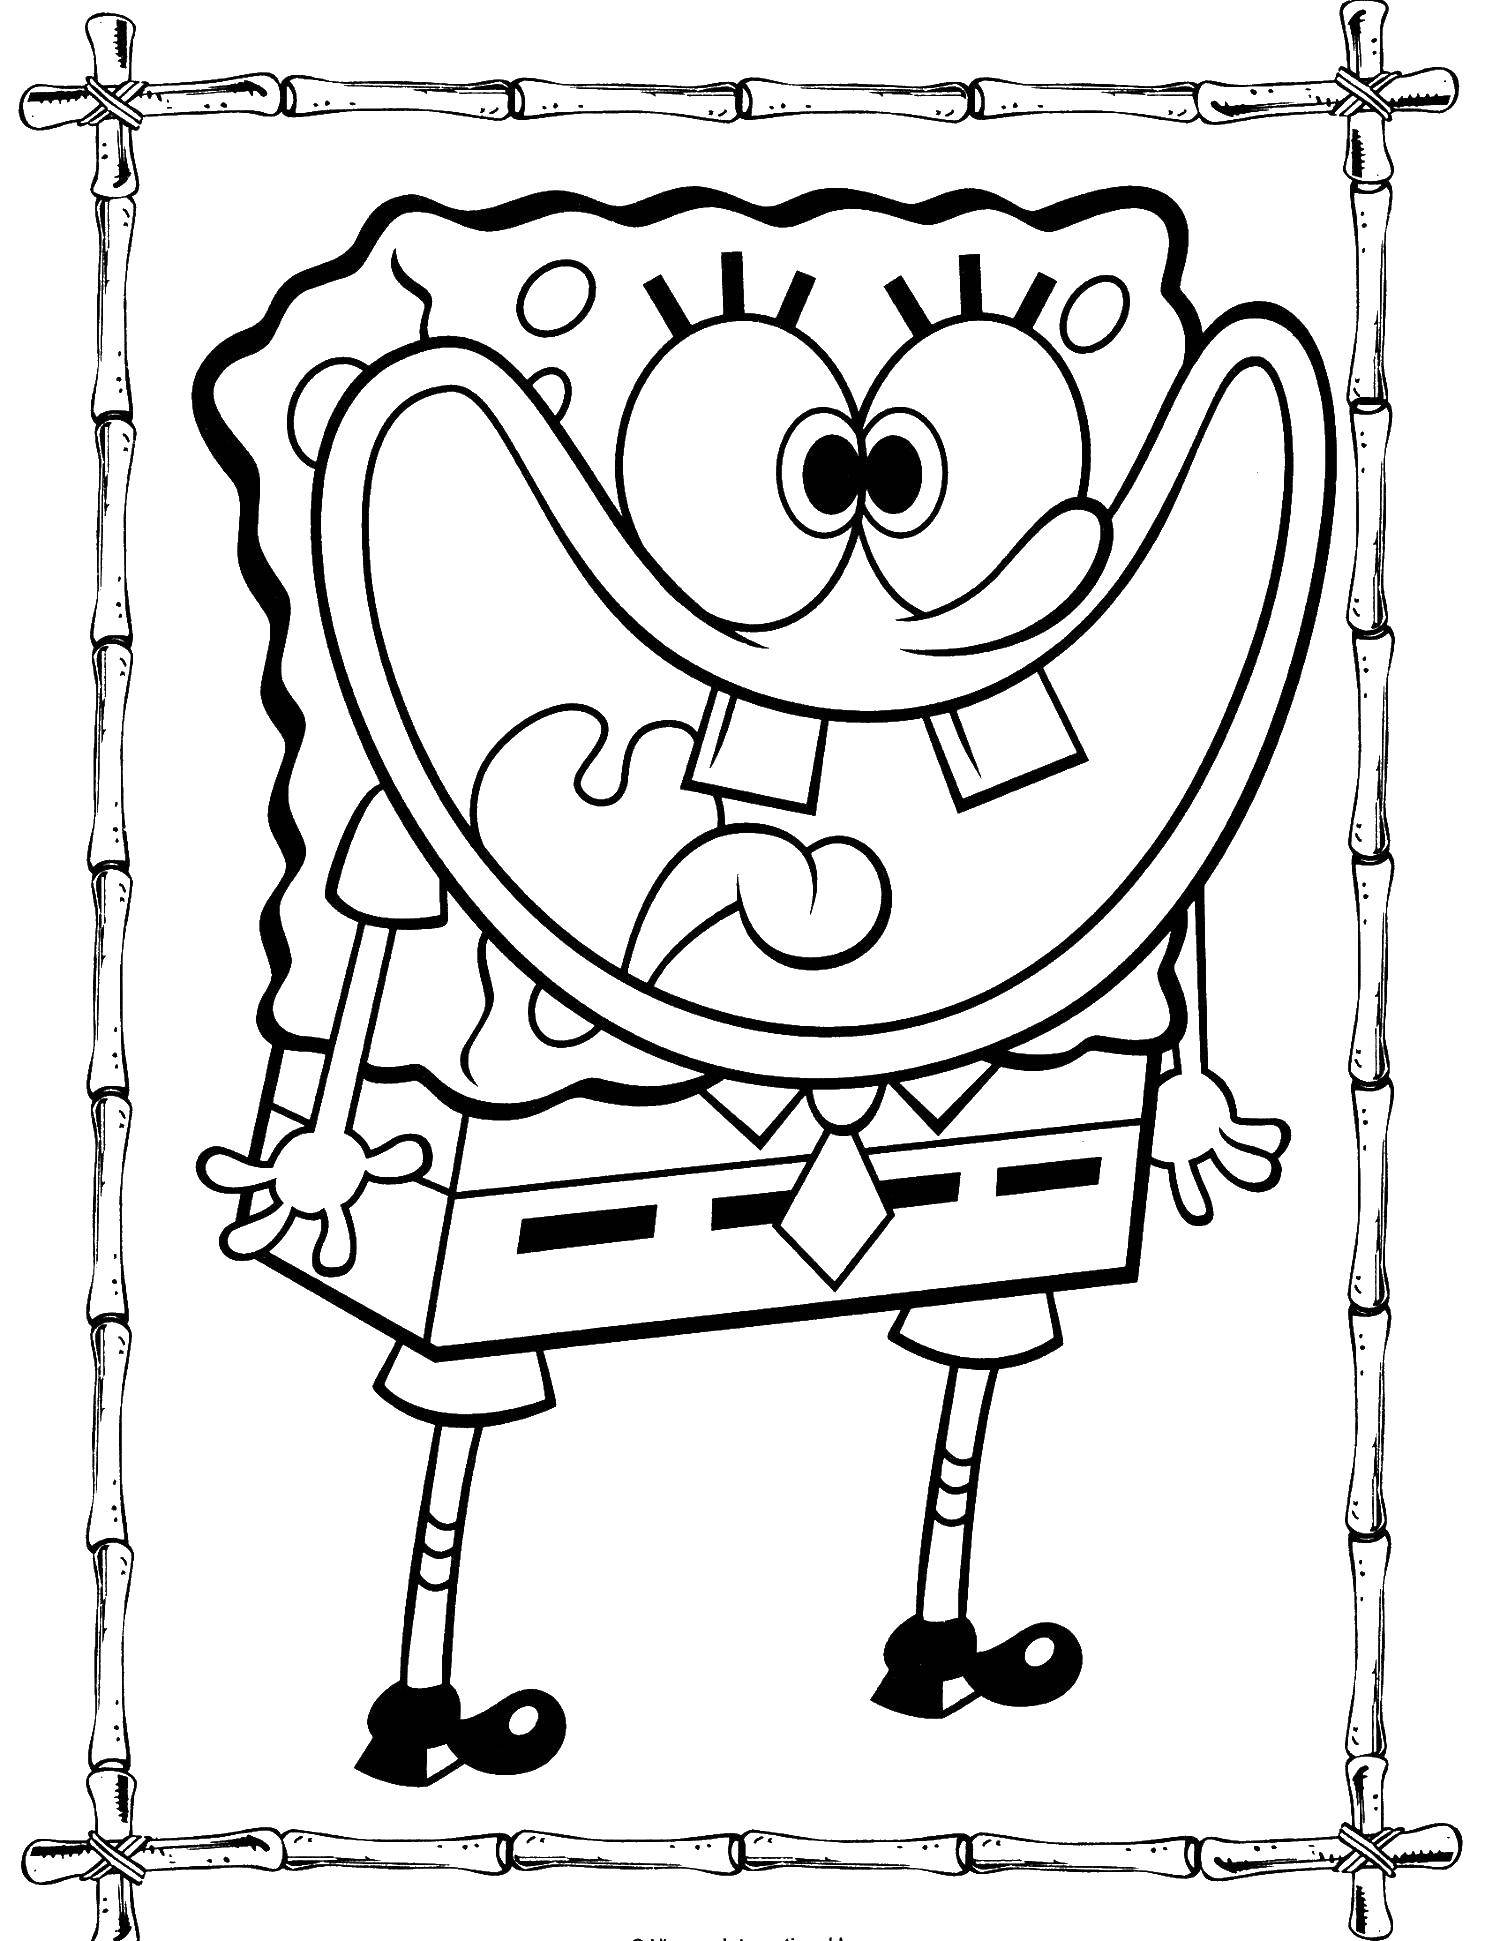 Coloring Spongebob boy. Category cartoons. Tags:  spongebob, Patrick.